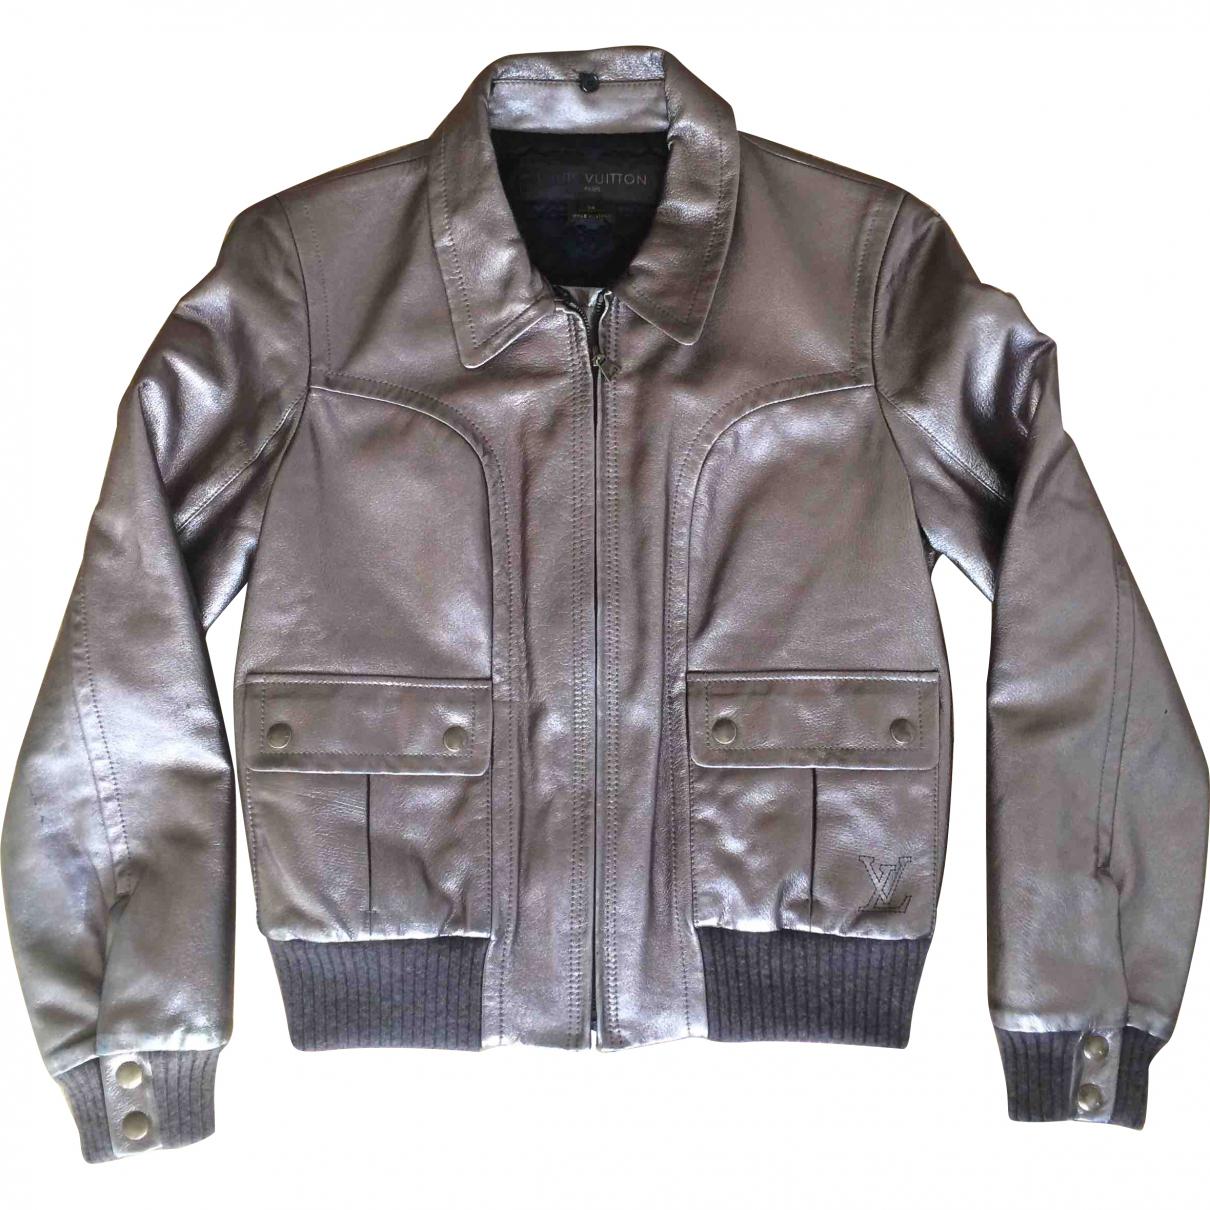 Louis Vuitton Leather Biker Jacket in Gold (Metallic) for Men - Lyst